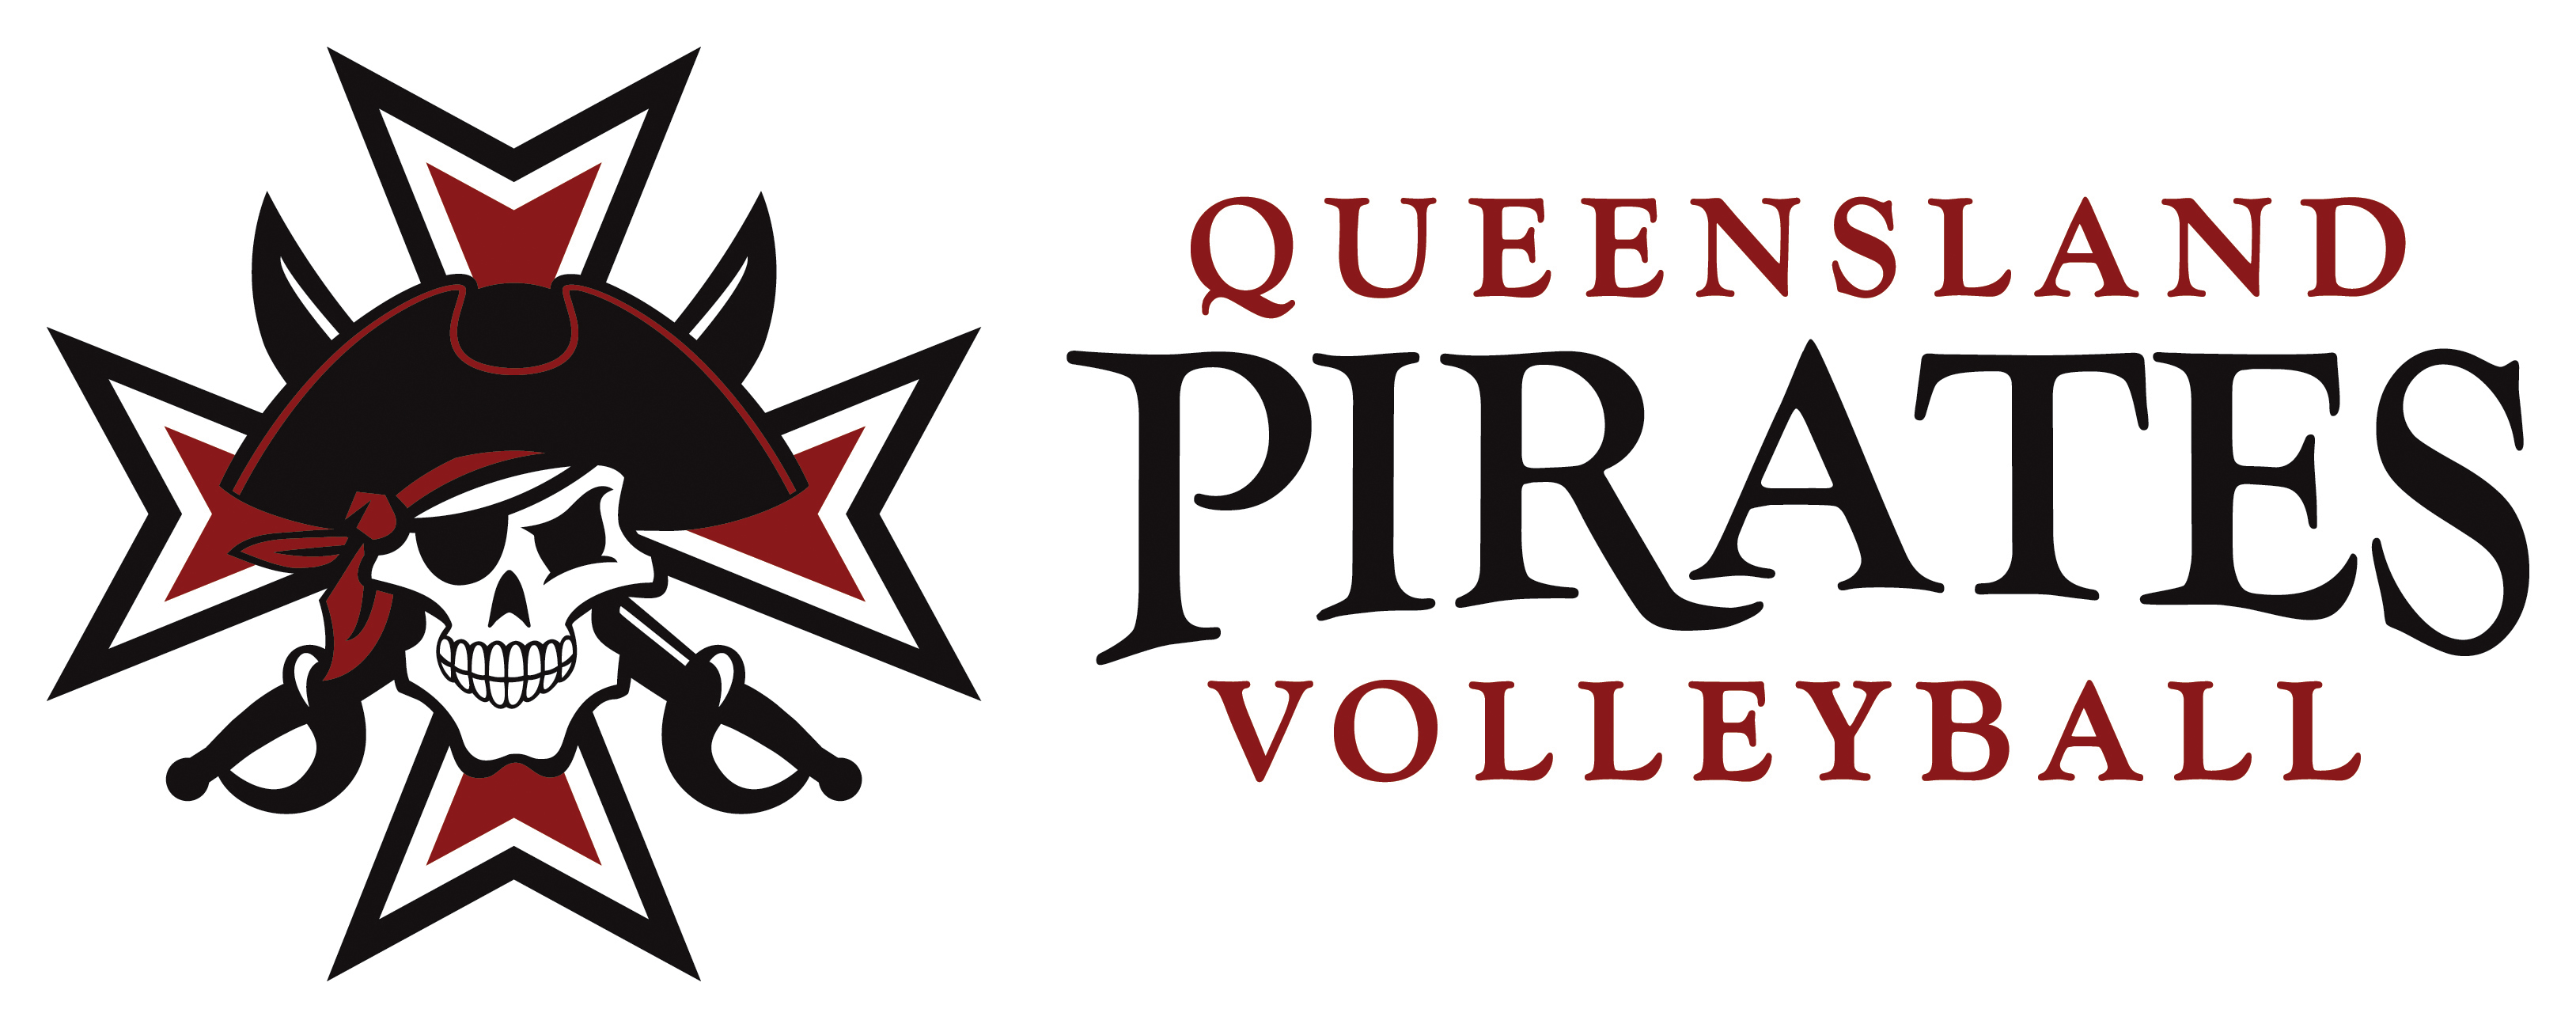 Vq-Pirates-Logo.jpg